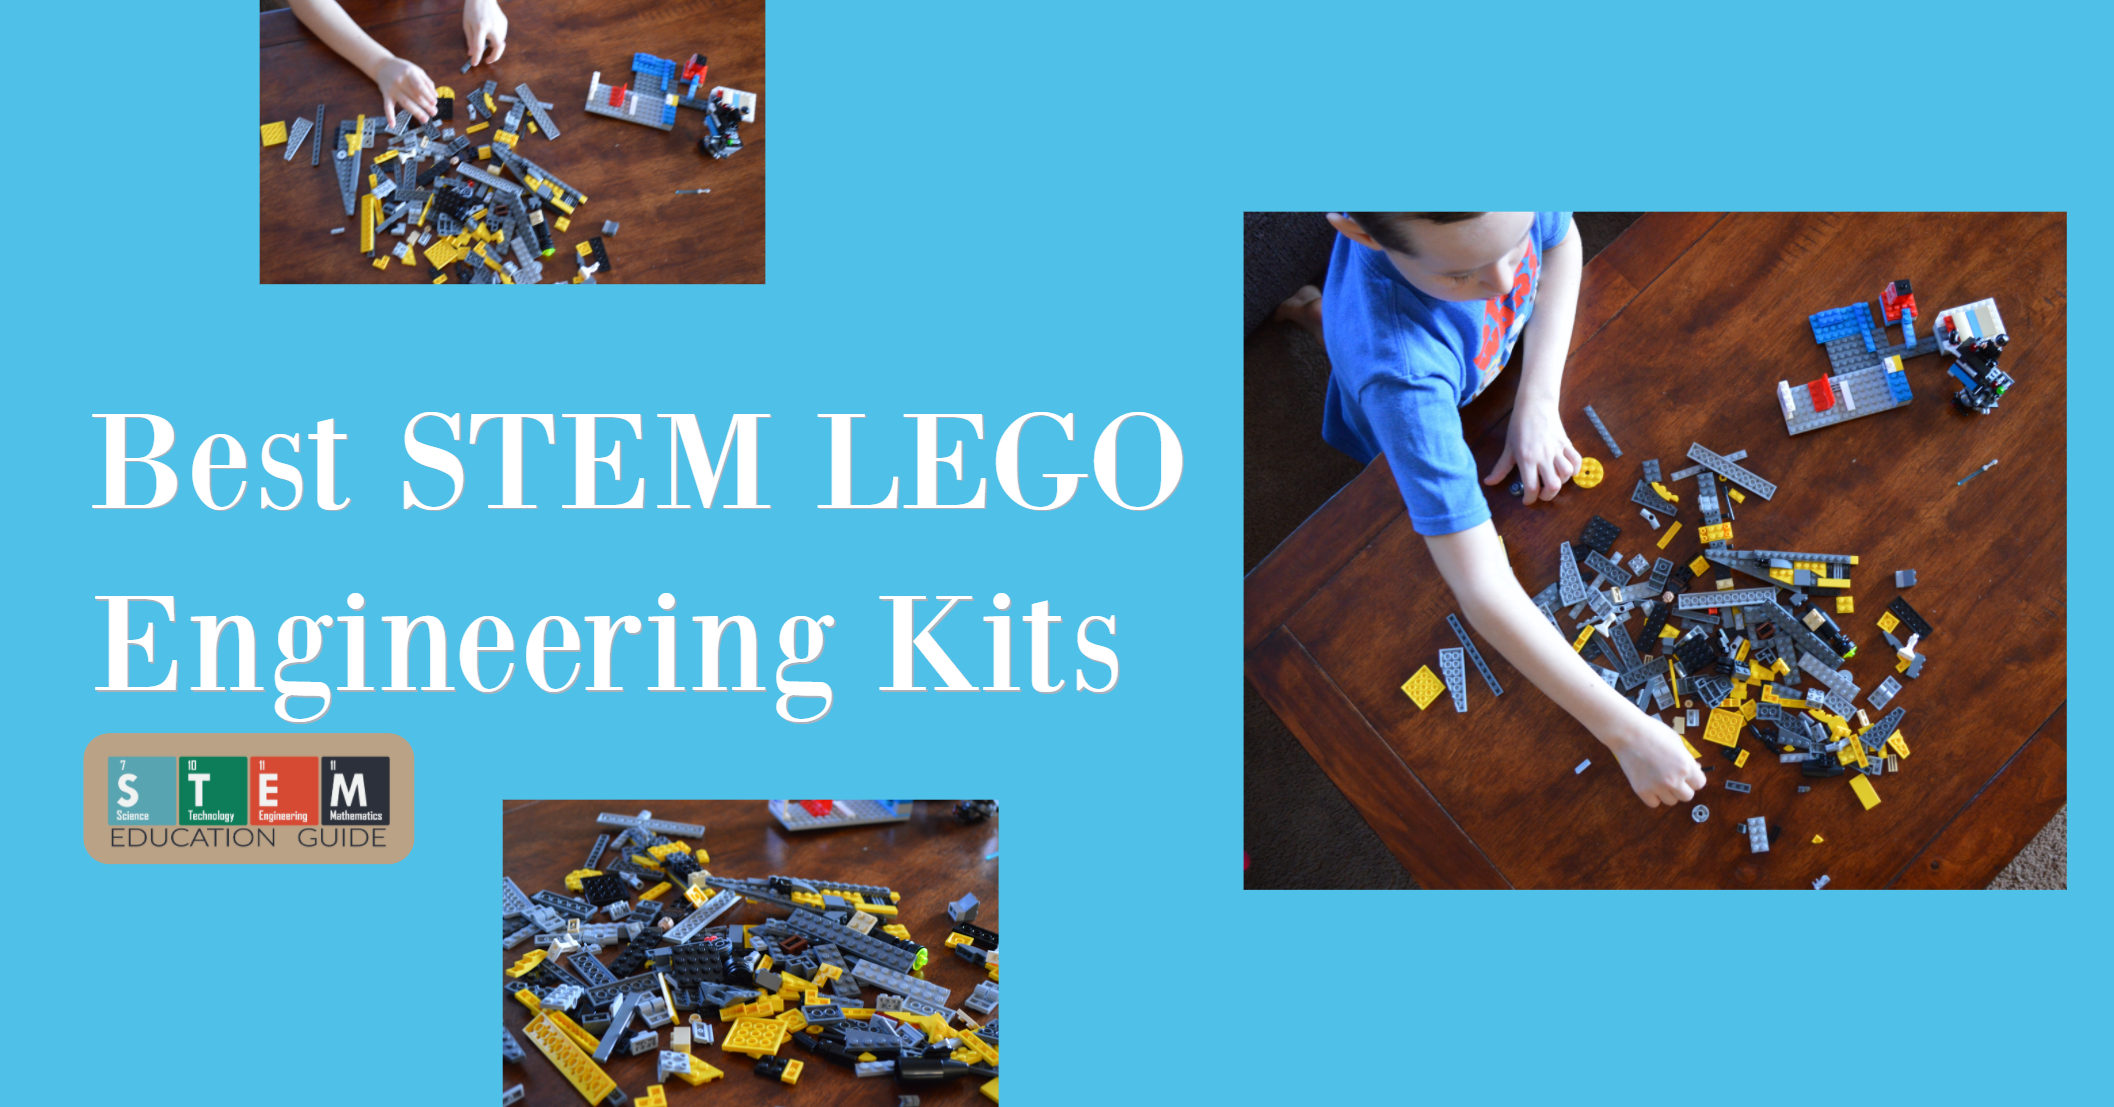 Best STEM LEGO Engineering Kits